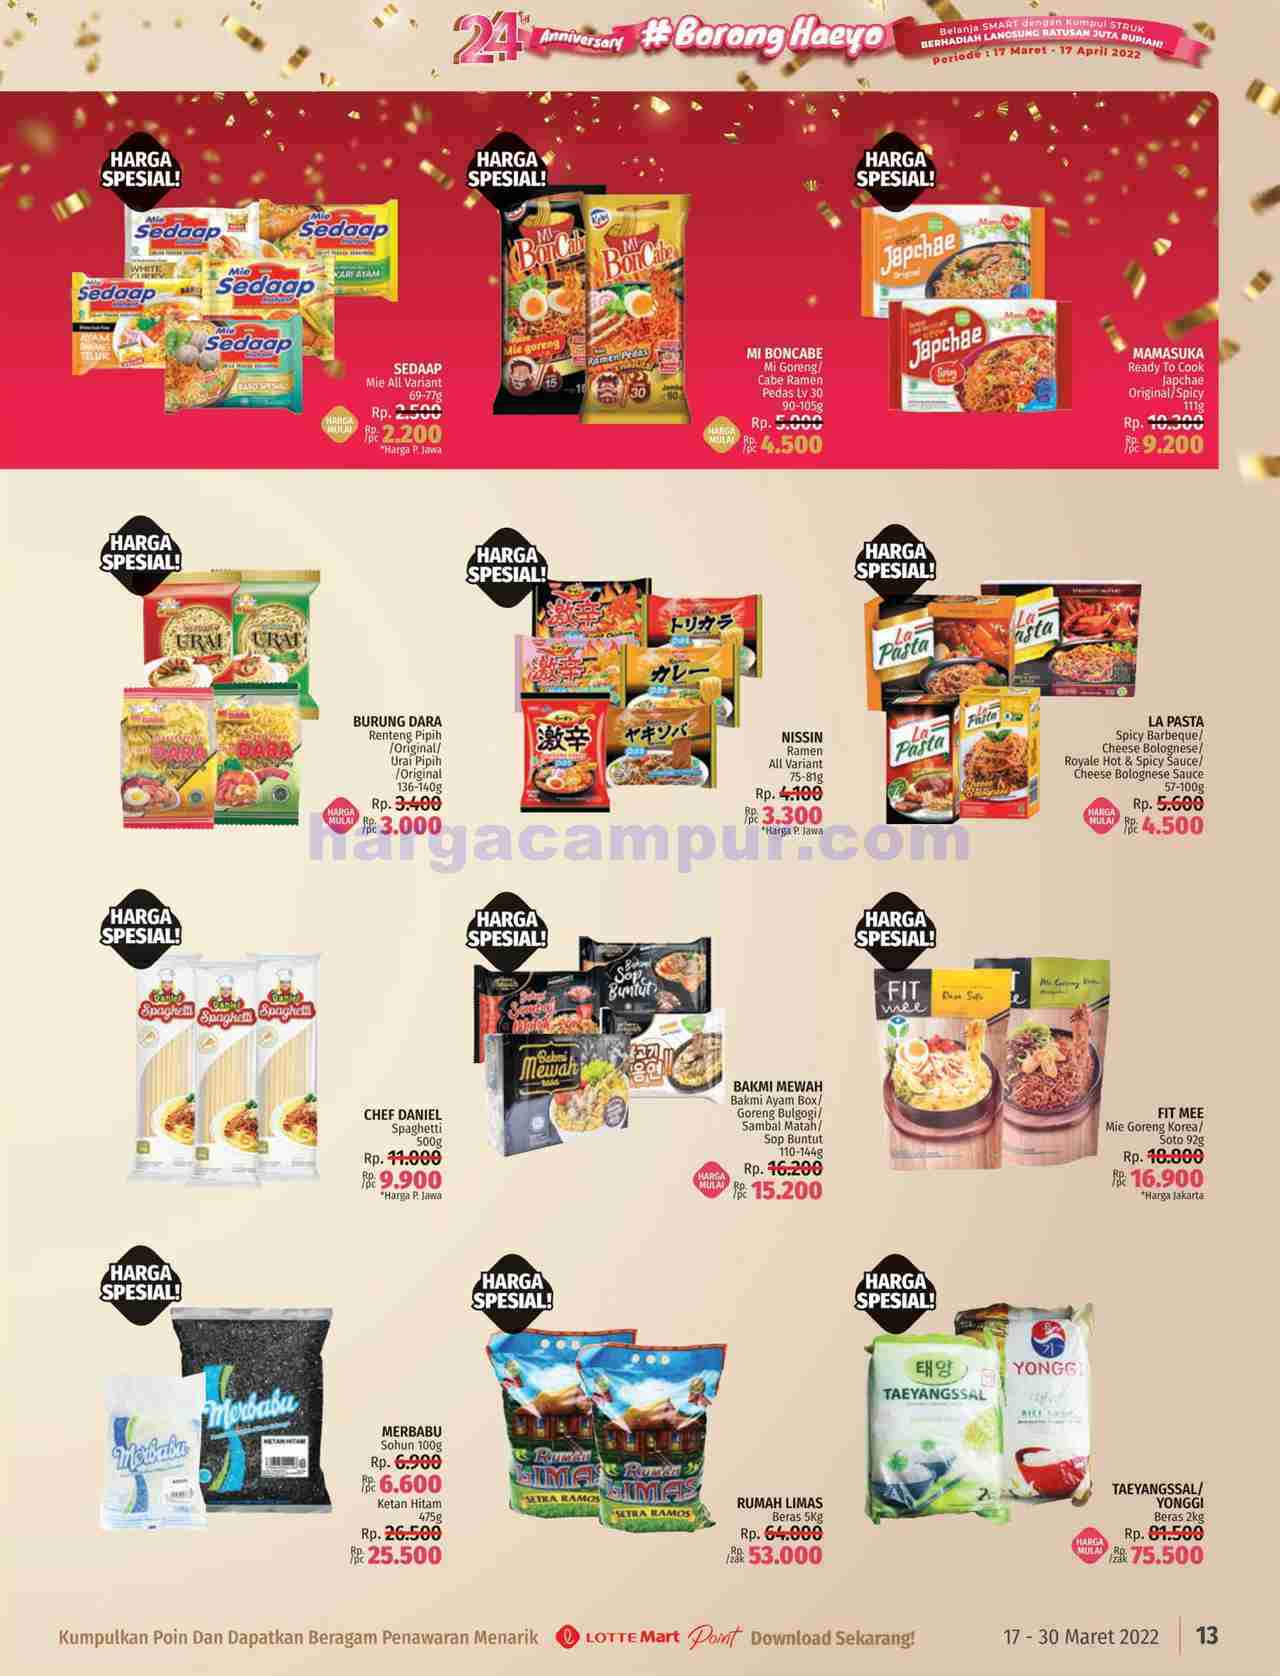 Katalog Promo Lottemart Terbaru 17 30 Maret 2022 13